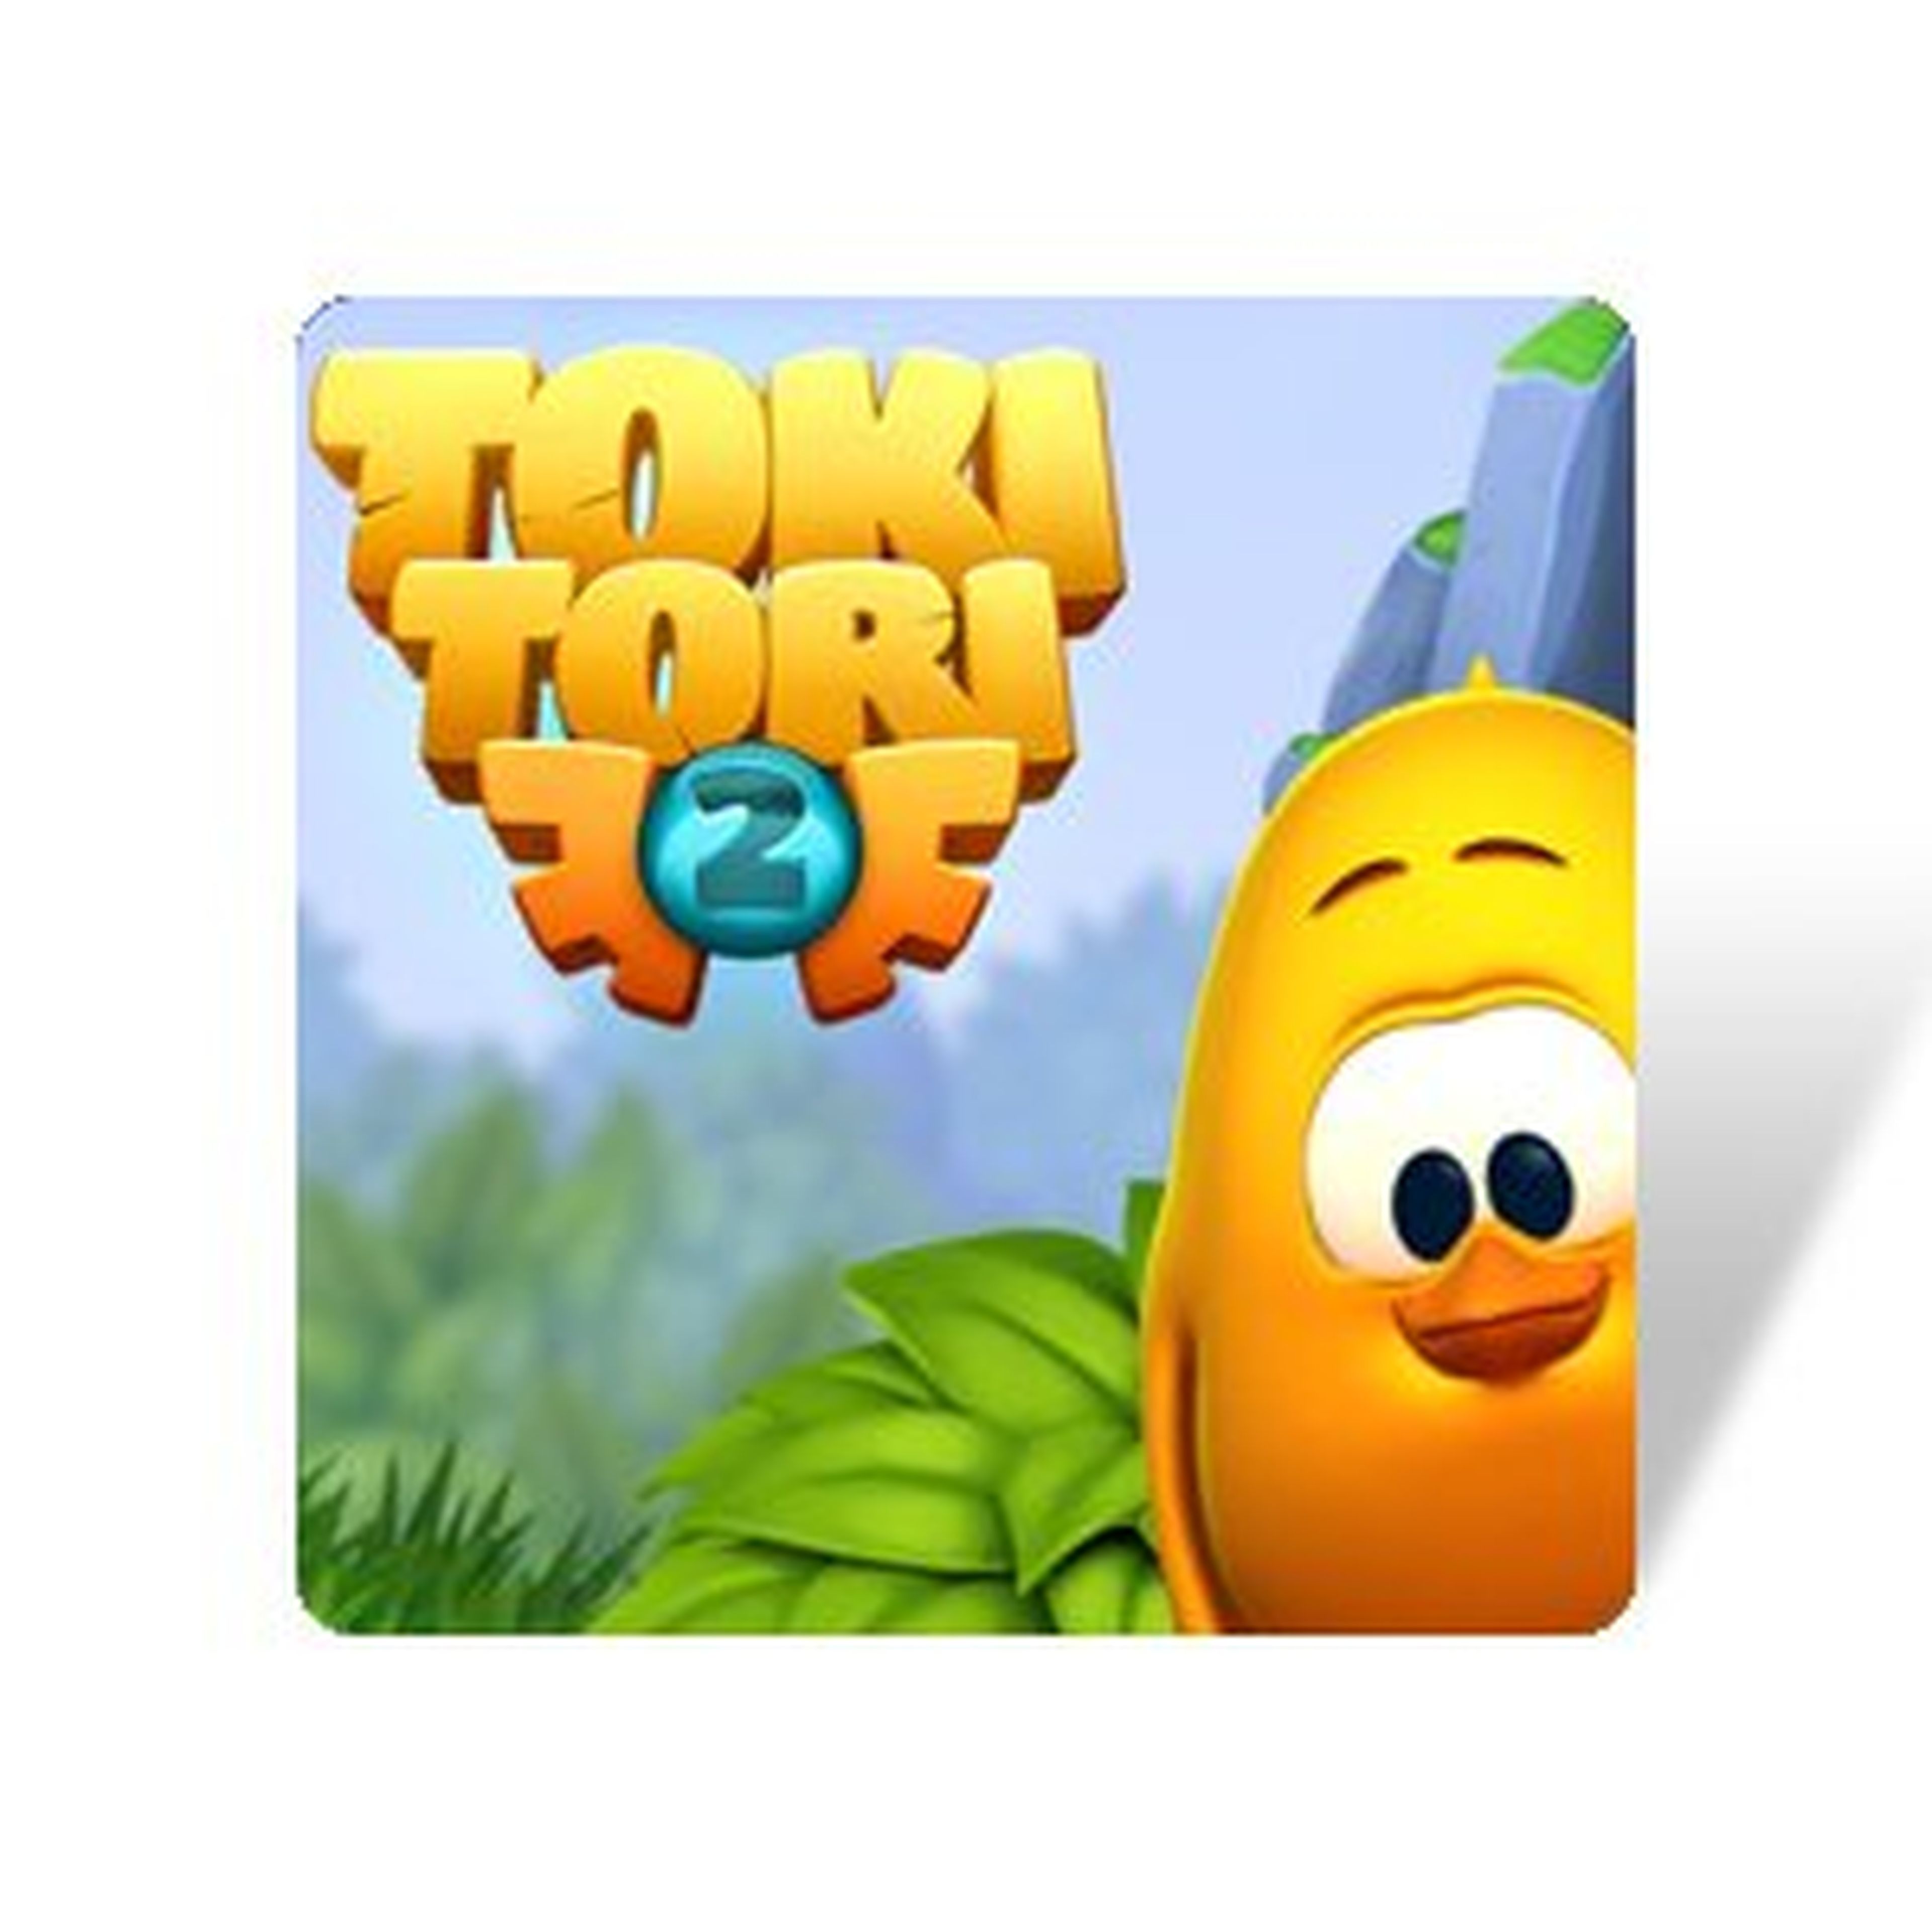 Toki Tori 2 para Wii U